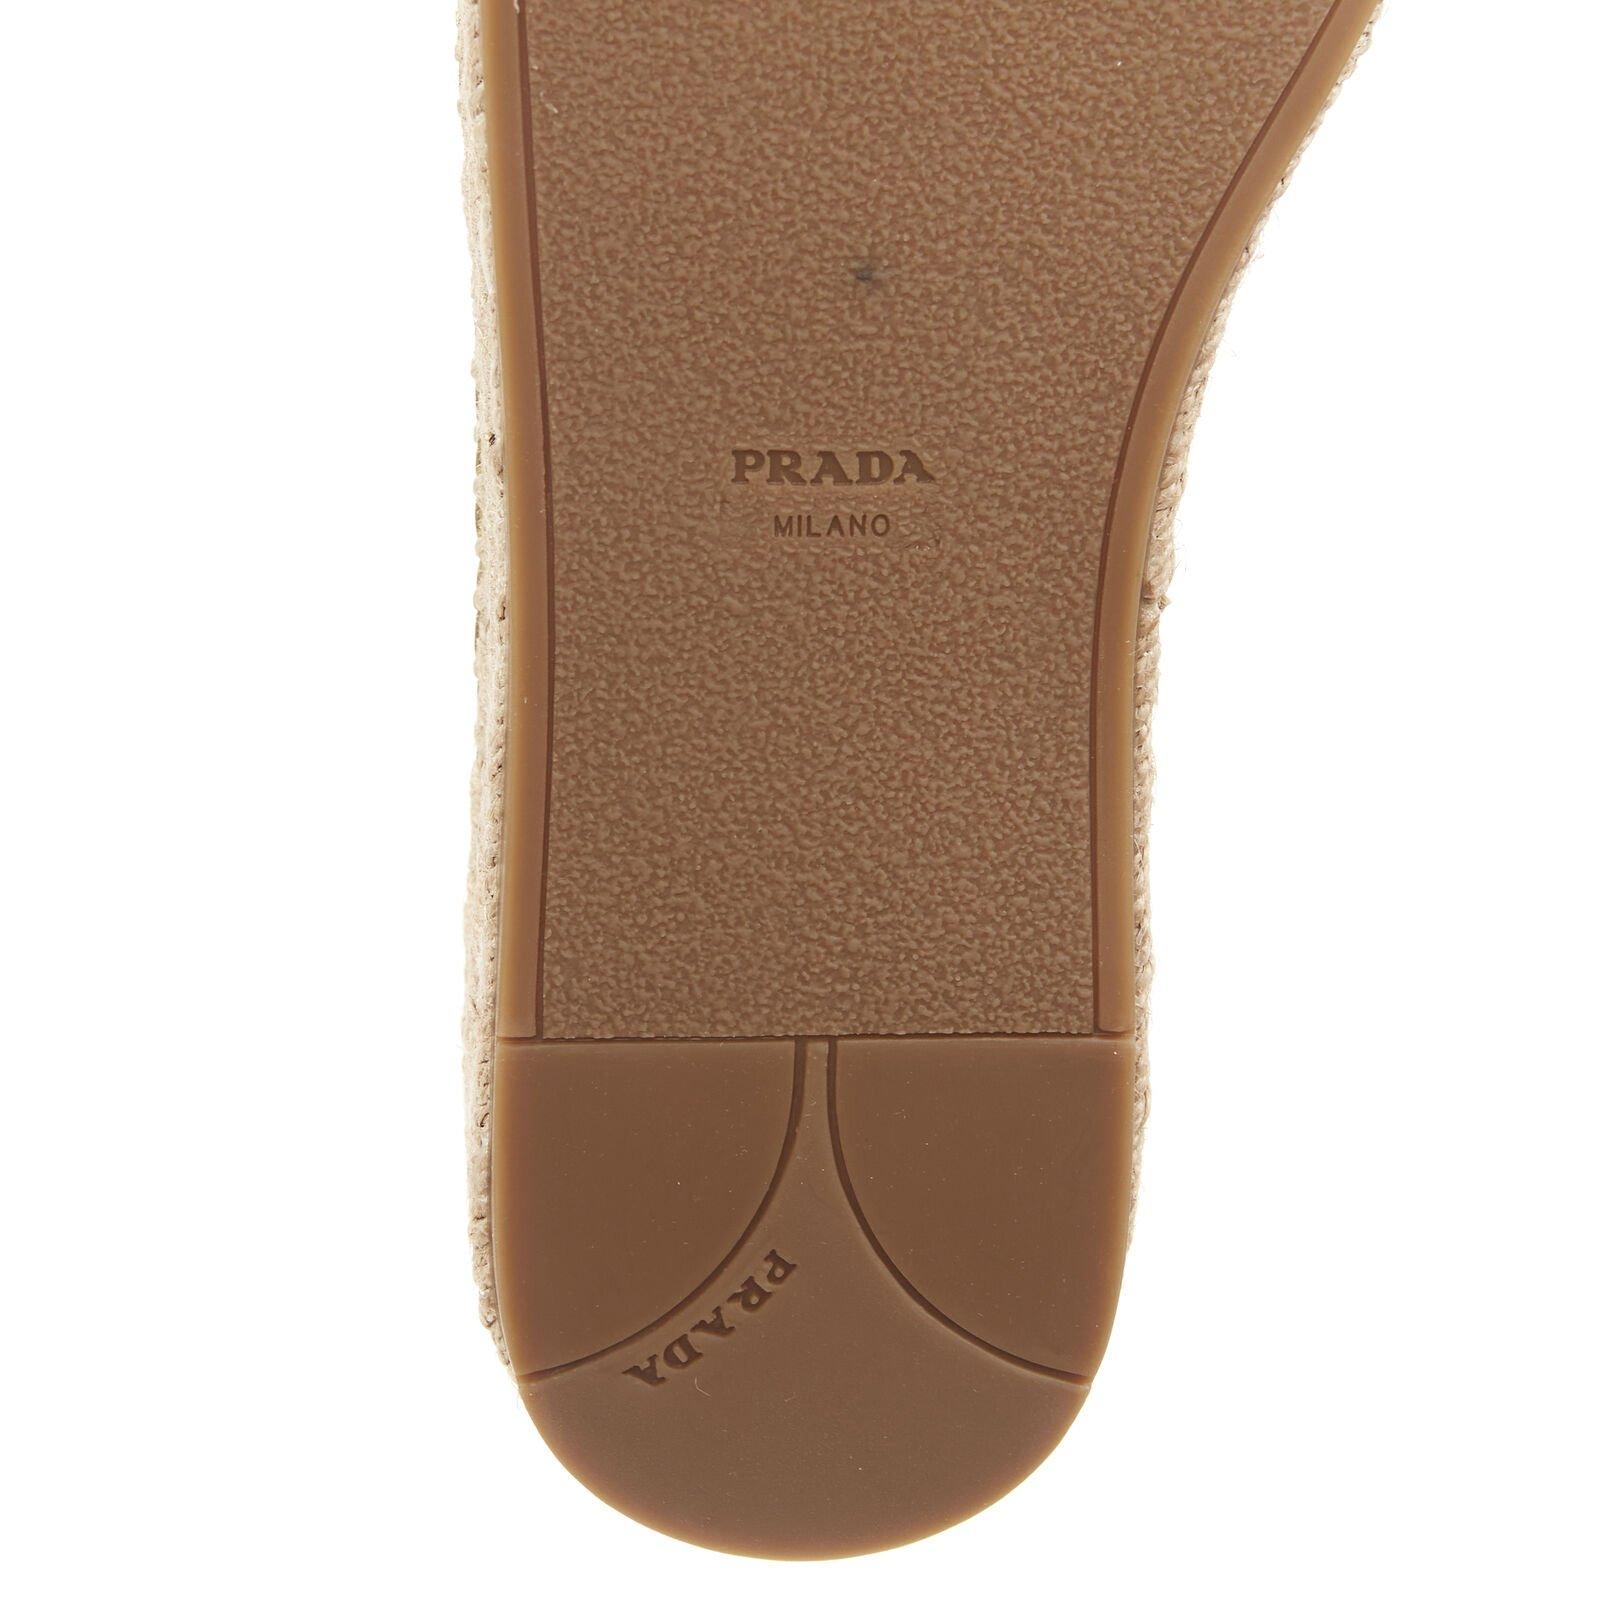 PRADA metallic gold leather logo peep toe jute platform espadrille shoe EU38 8